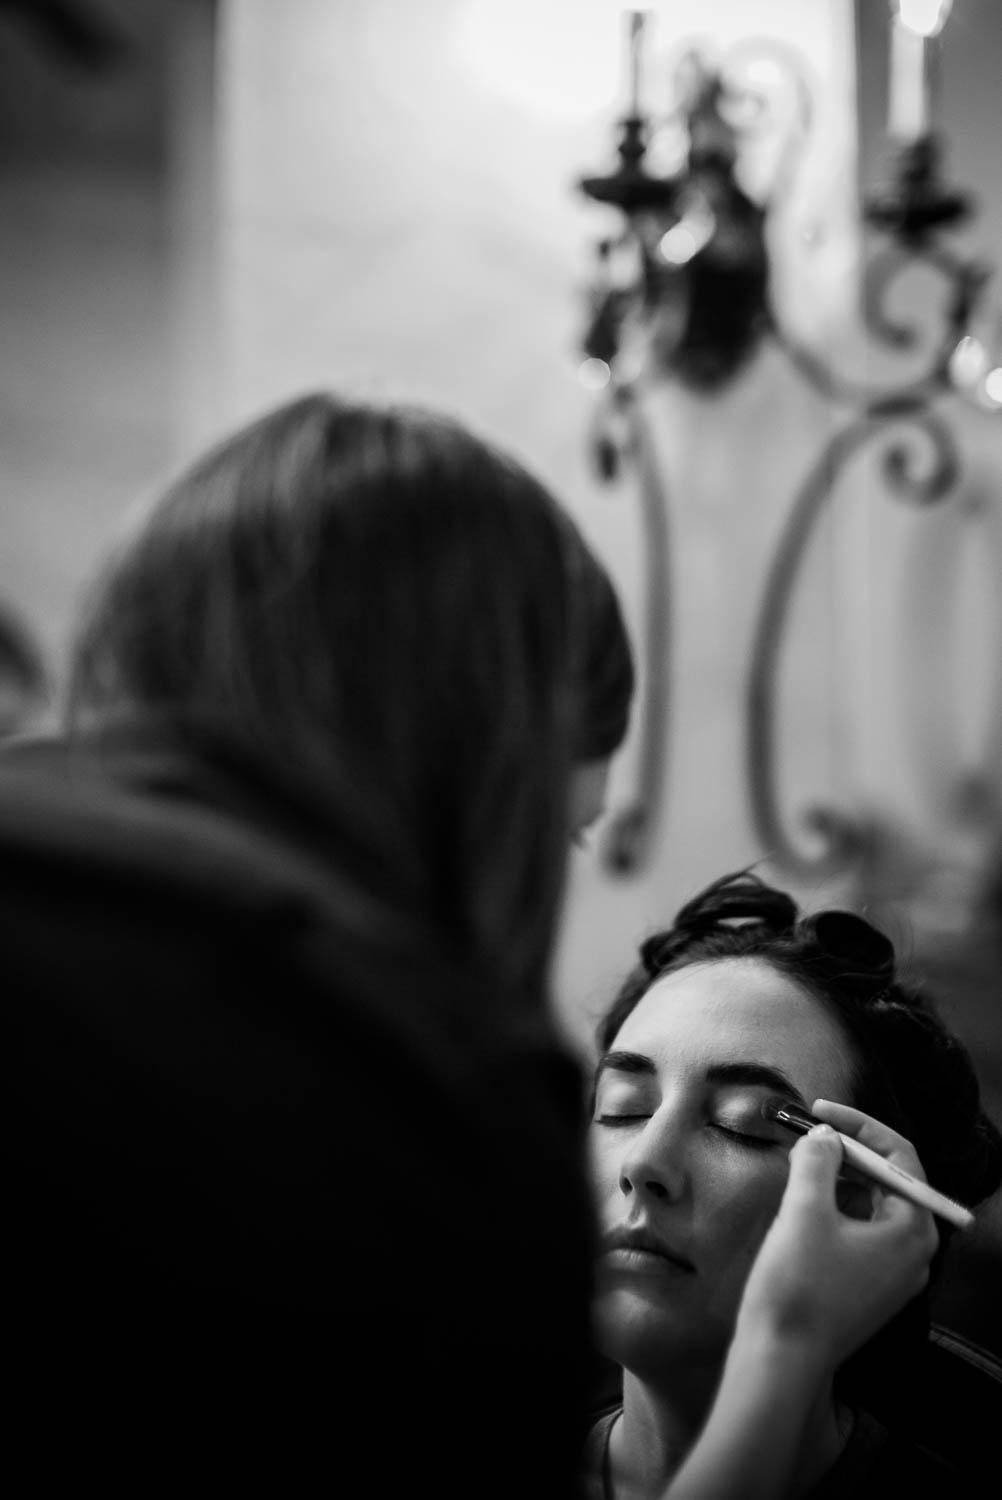 Image shows Bri the bride applying makeup Pecan Springs Houston Texas photo by Philip Thomas Photography